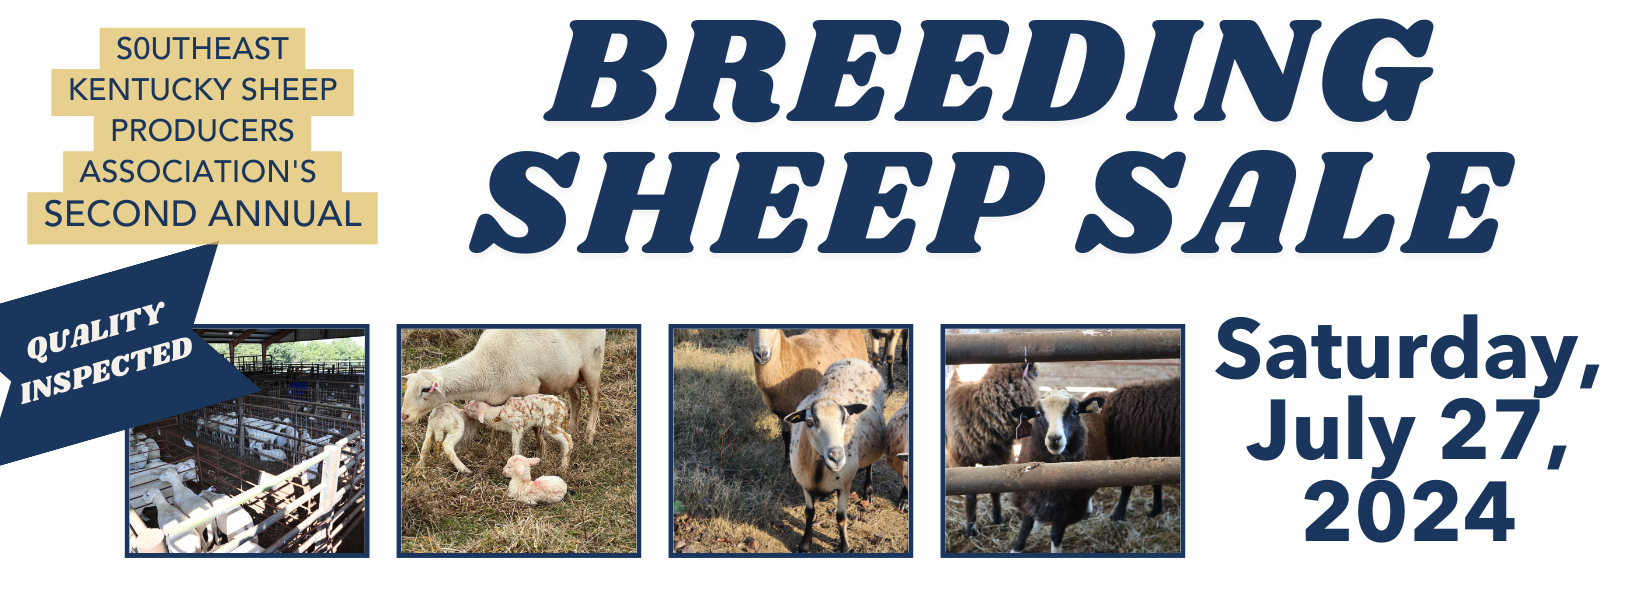 Second Annual Breeding Sheep Sale July 27, 2024